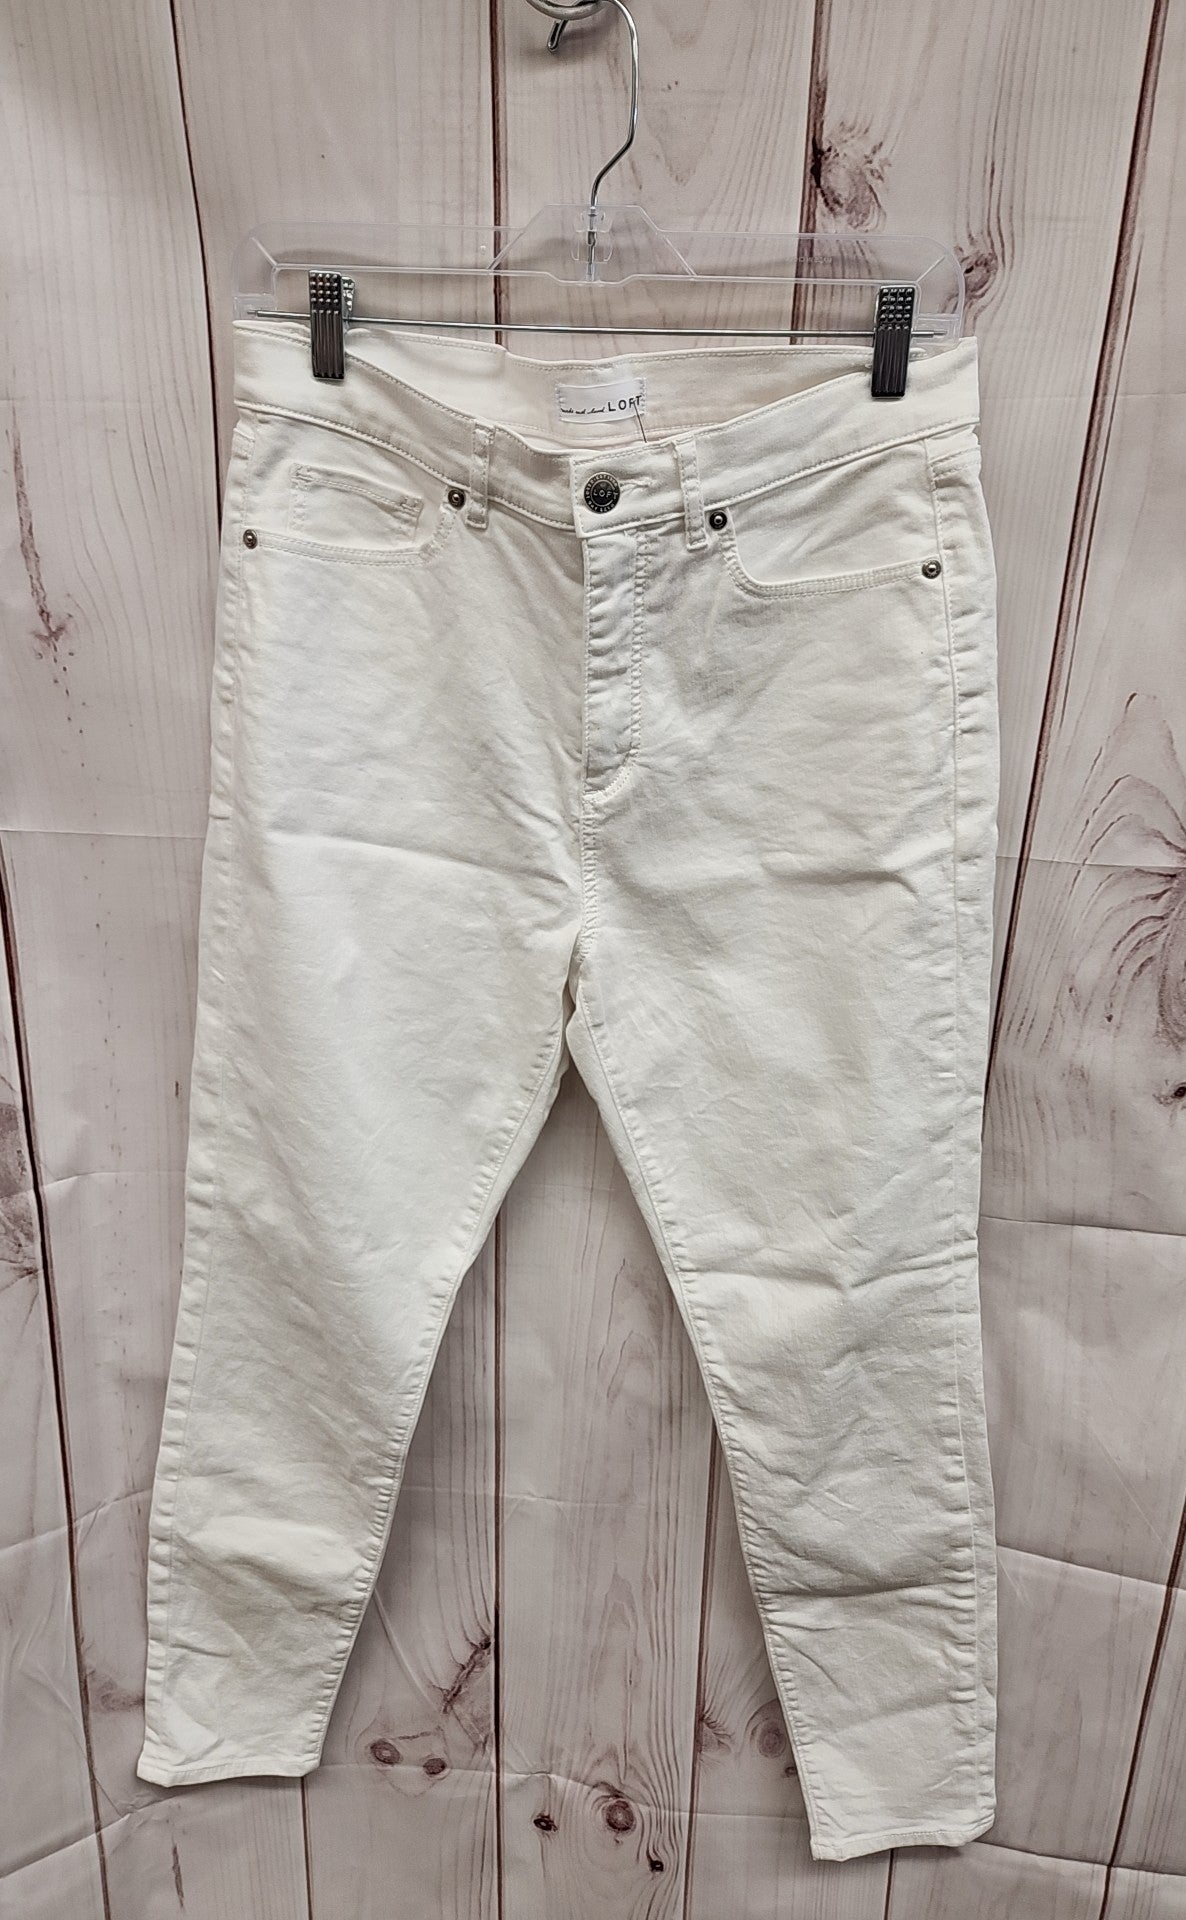 Loft Women's Size 29 (7-8) High Waist Skinny Ankle White Jeans